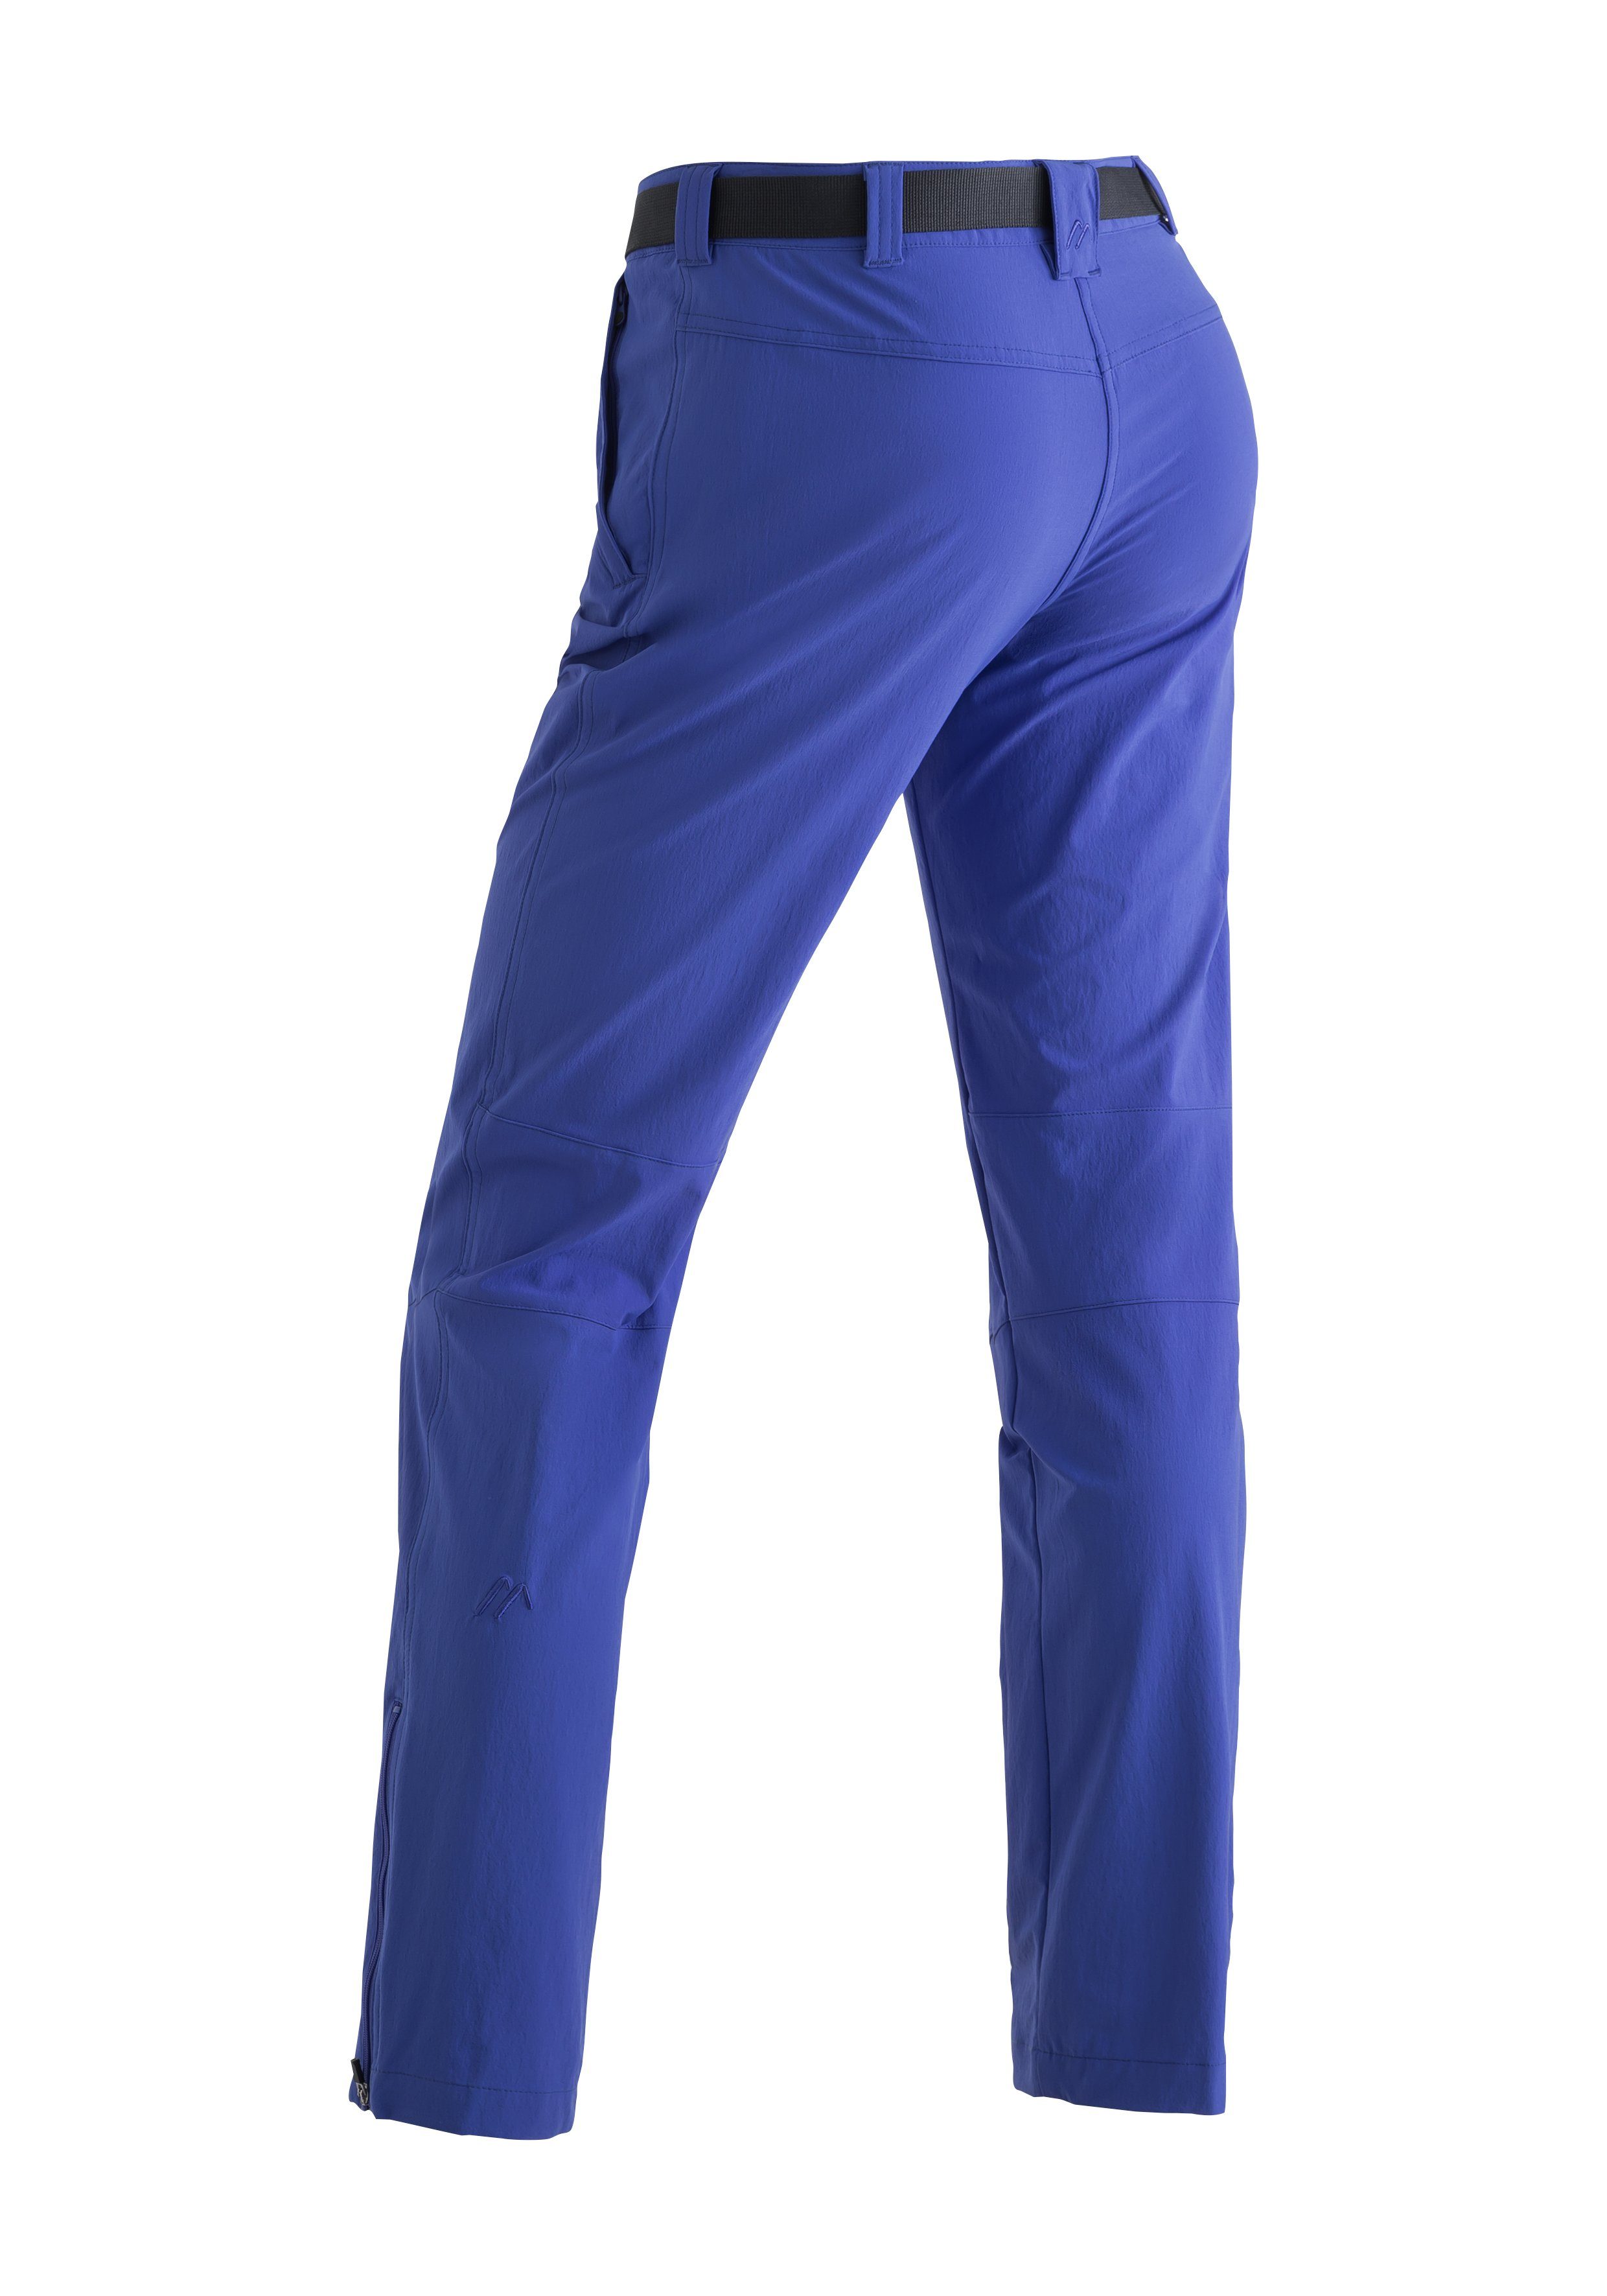 Maier Inara Funktionshose Sports slim darkblue Outdoor-Hose Damen aus elastischem Wanderhose, Material